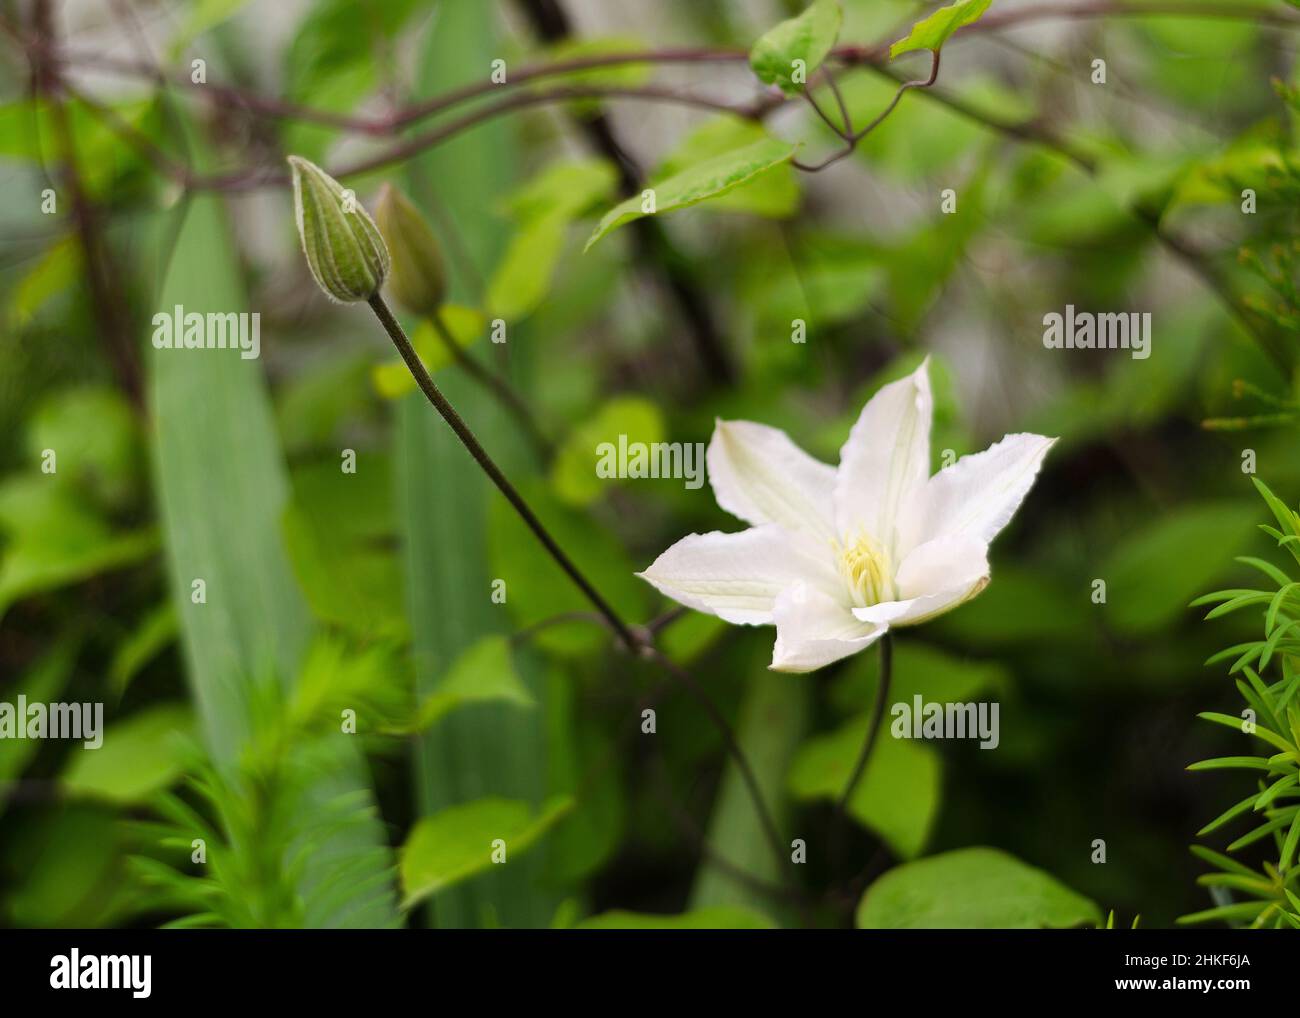 White Clematis flower in a garden Stock Photo